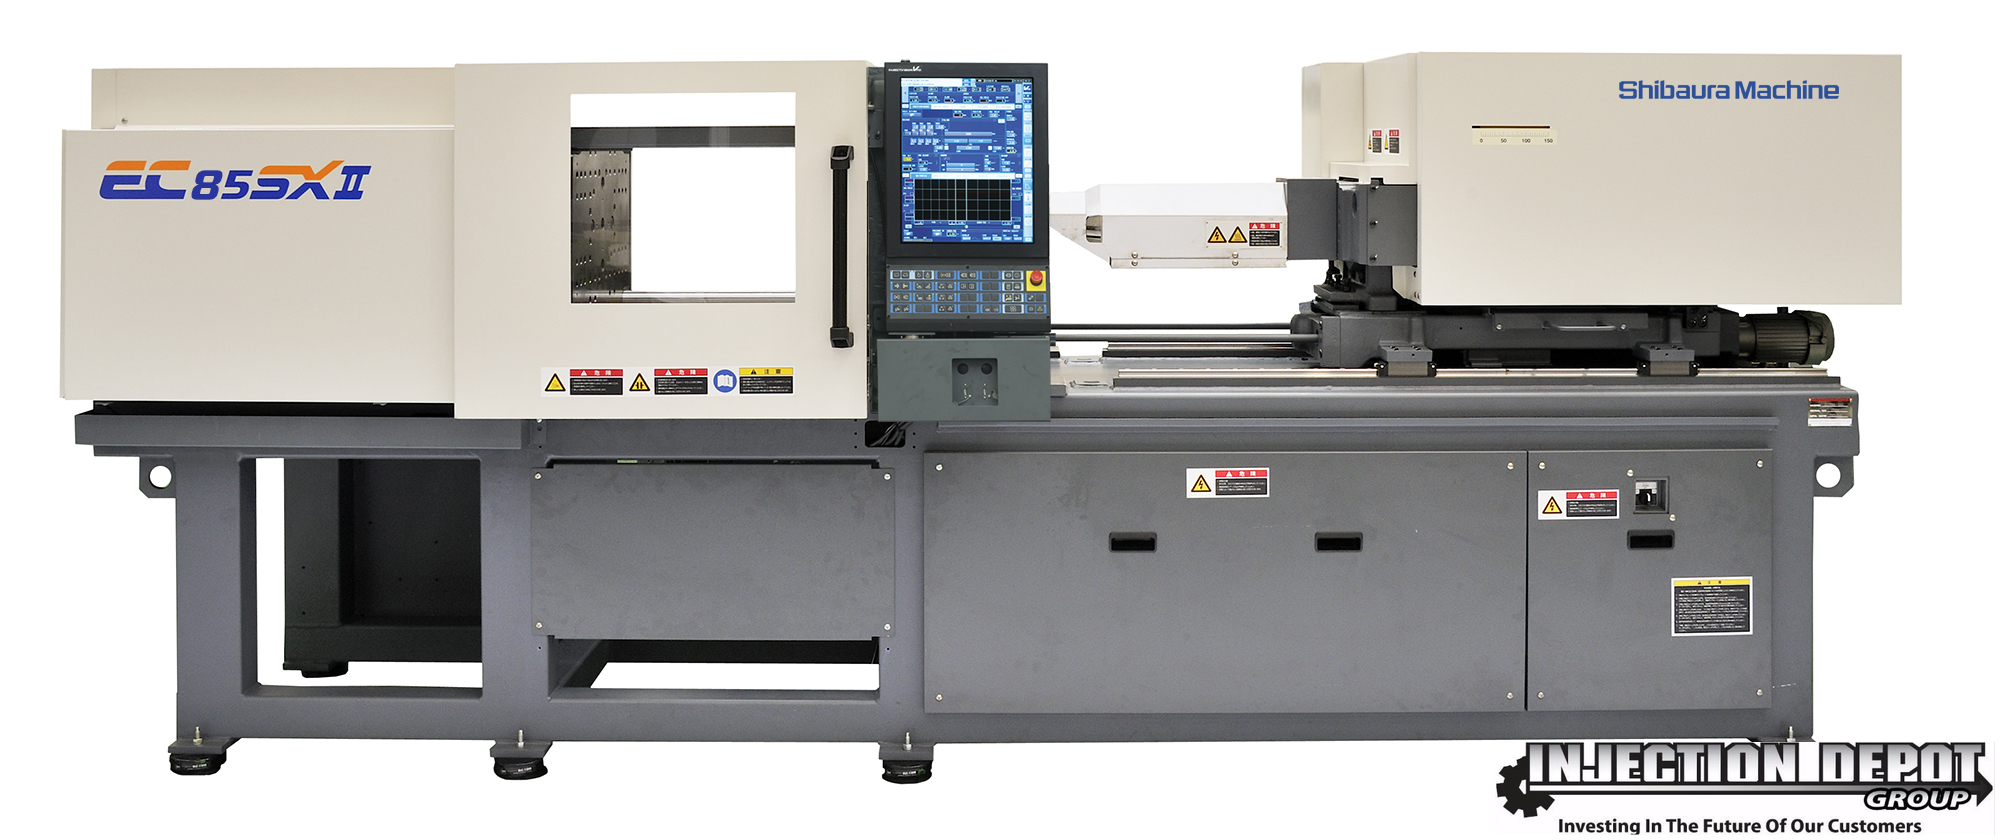 SHIBAURA MACHINE EC85SXIIIV70-U22-2B Horizontal Injection Moulding Machines | INJECTION DEPOT GROUP